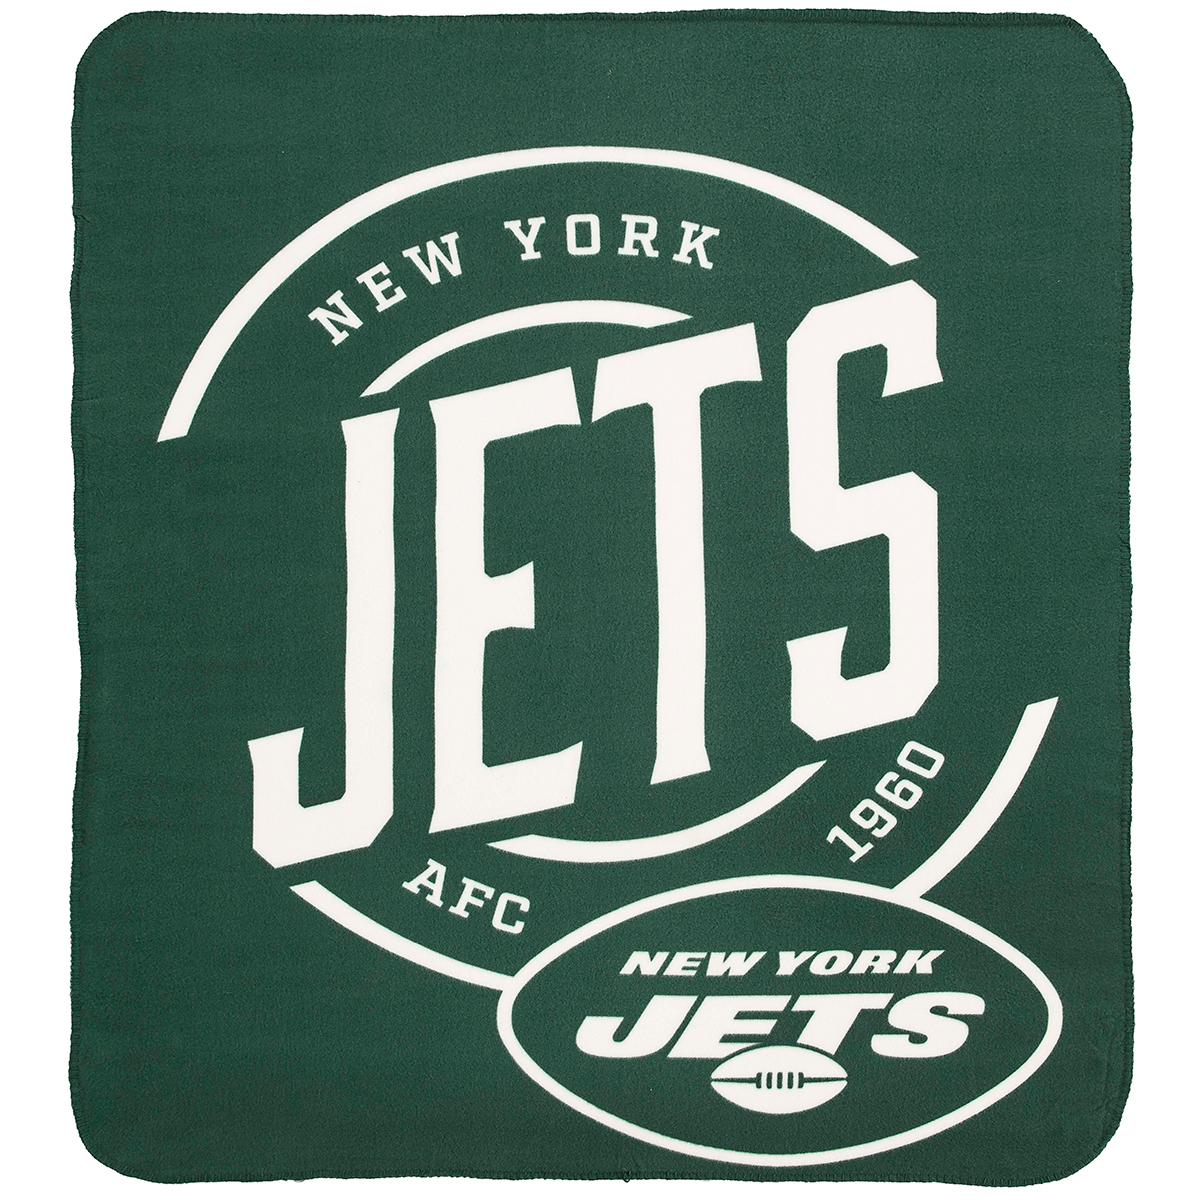 New York Jets Campaign Fleece Throw Blanket, Green